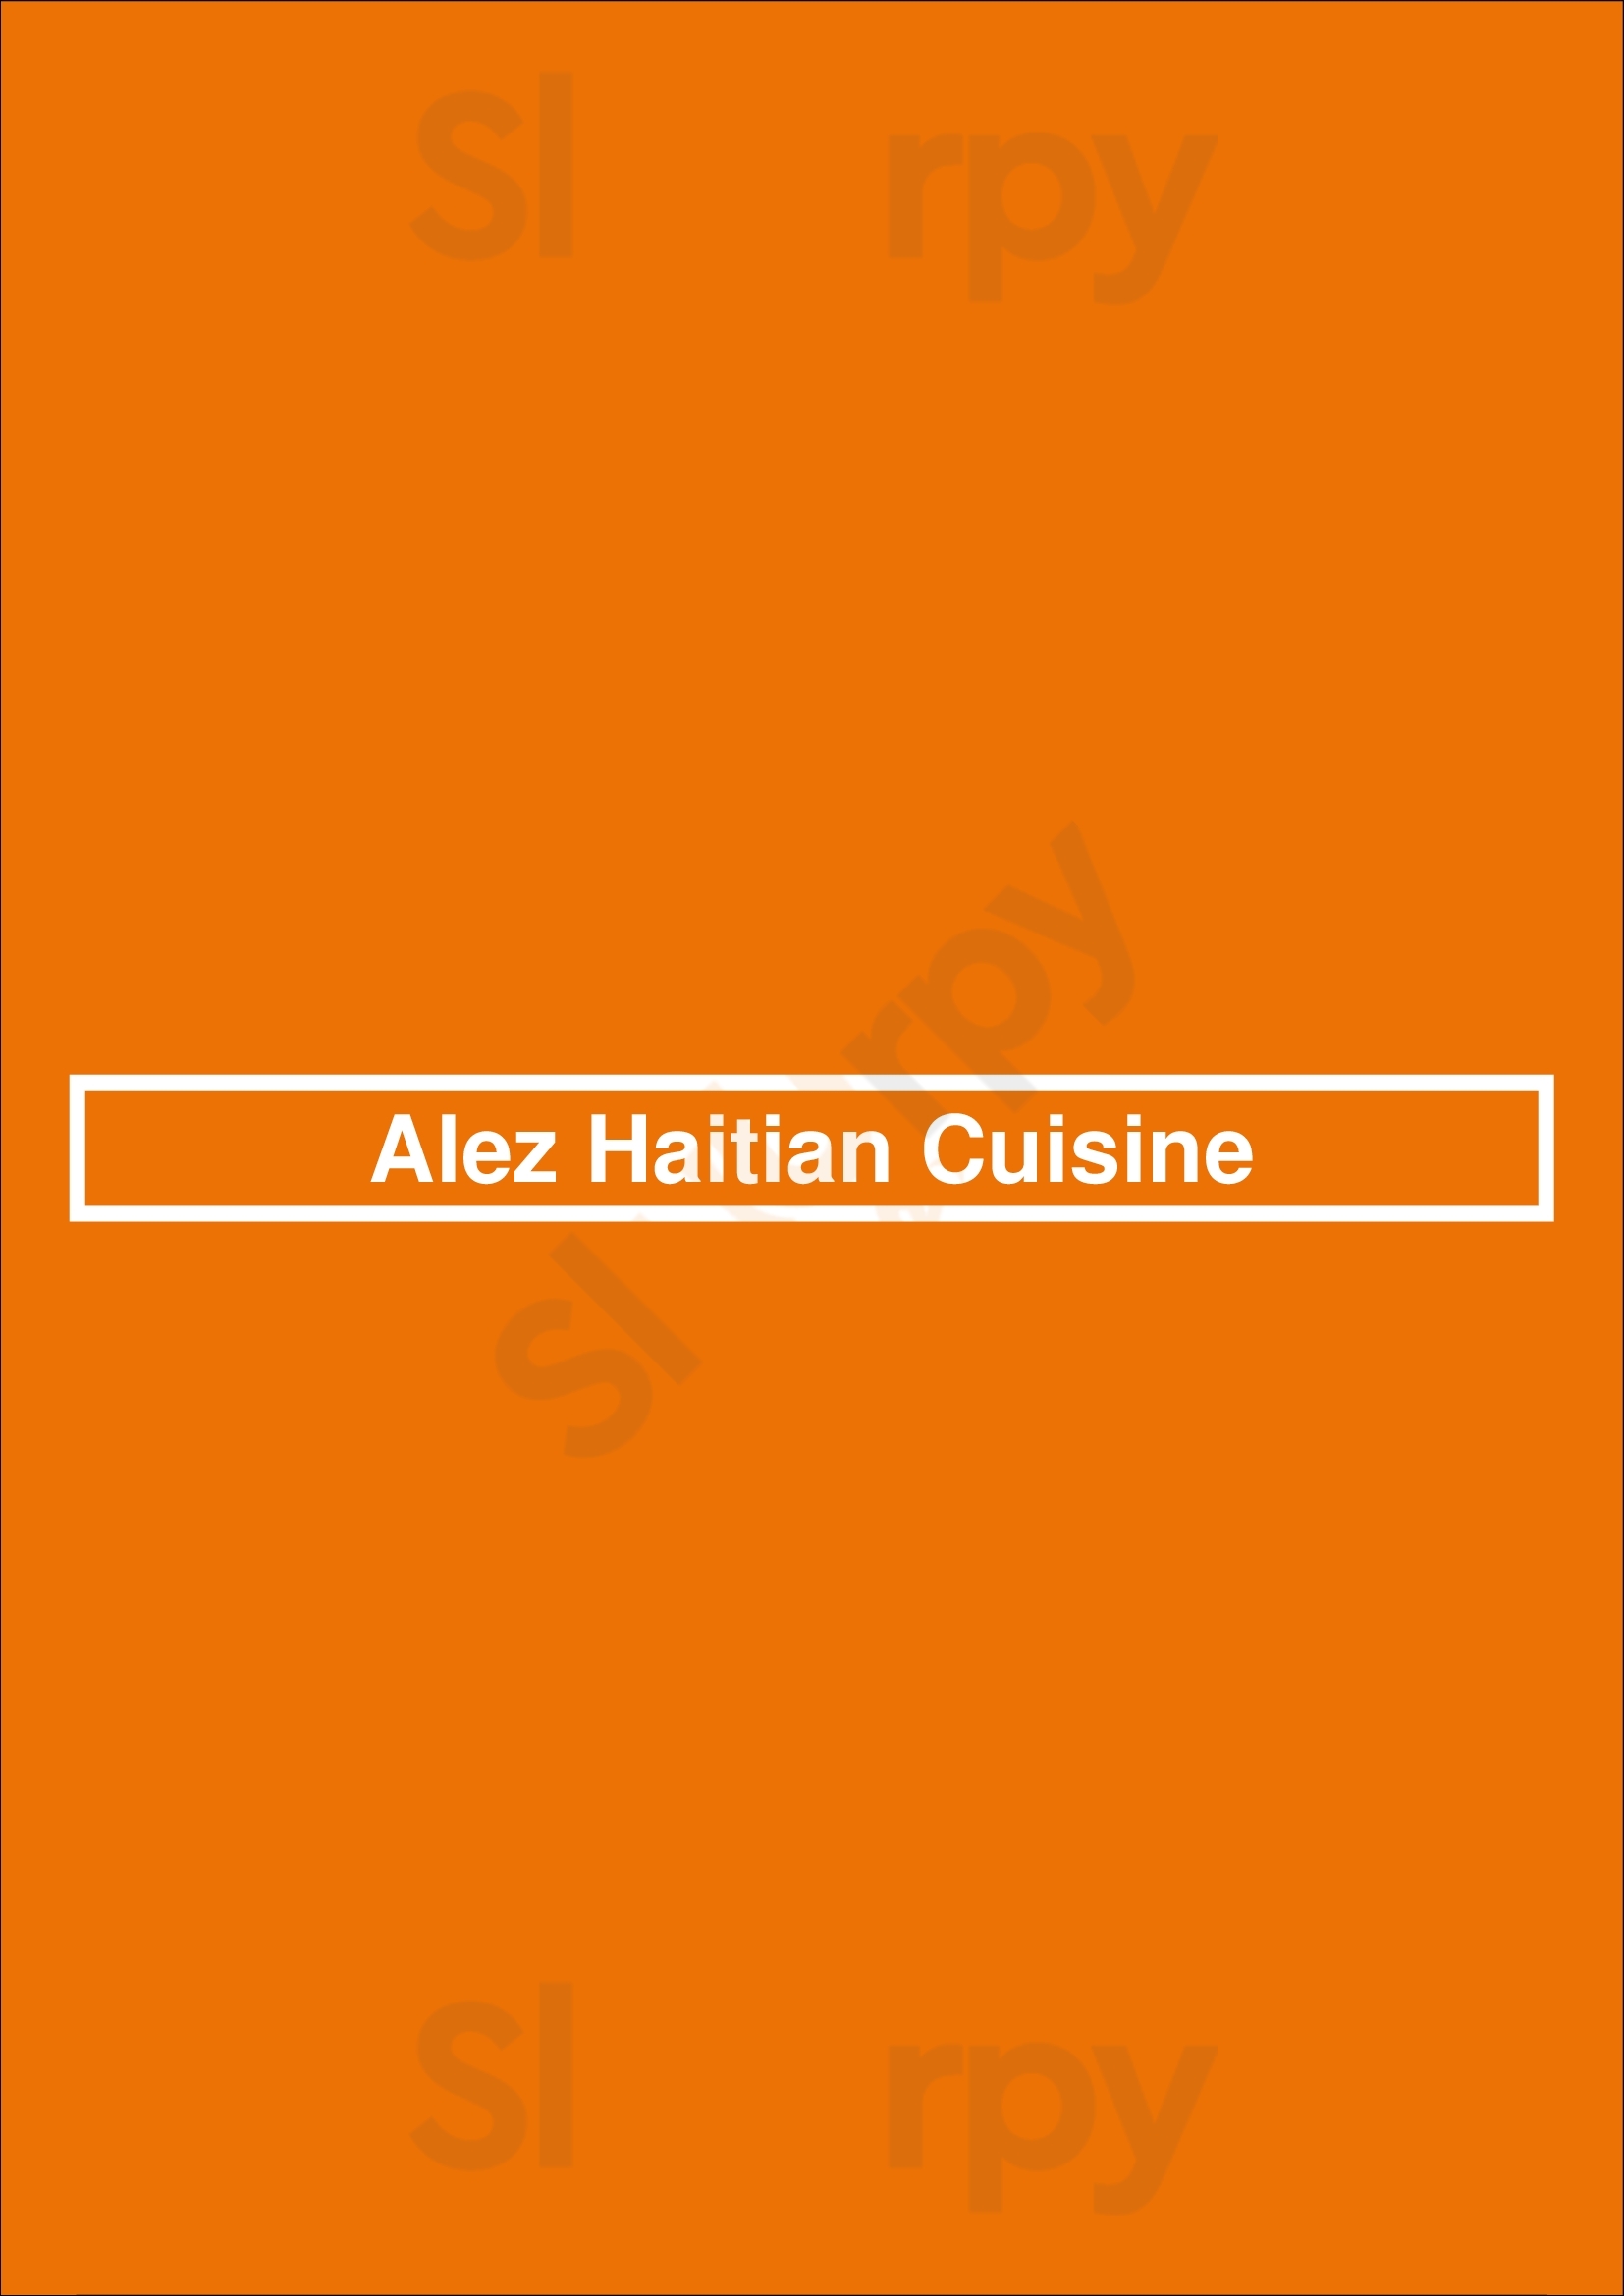 Alez Haitian Cuisine Tampa Menu - 1